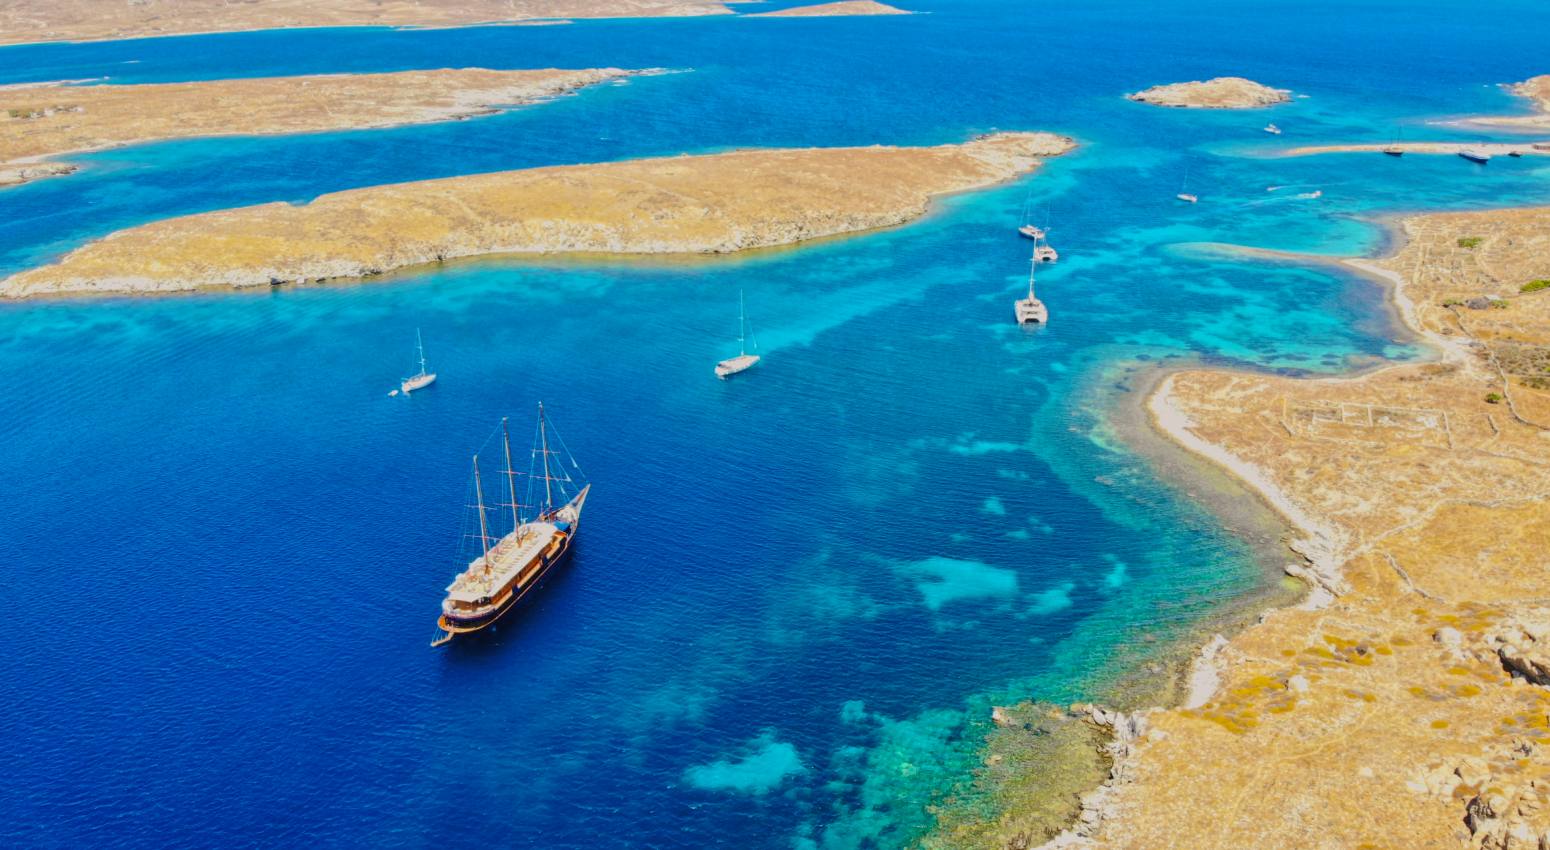 Aerial view of a small ship sailing through islands